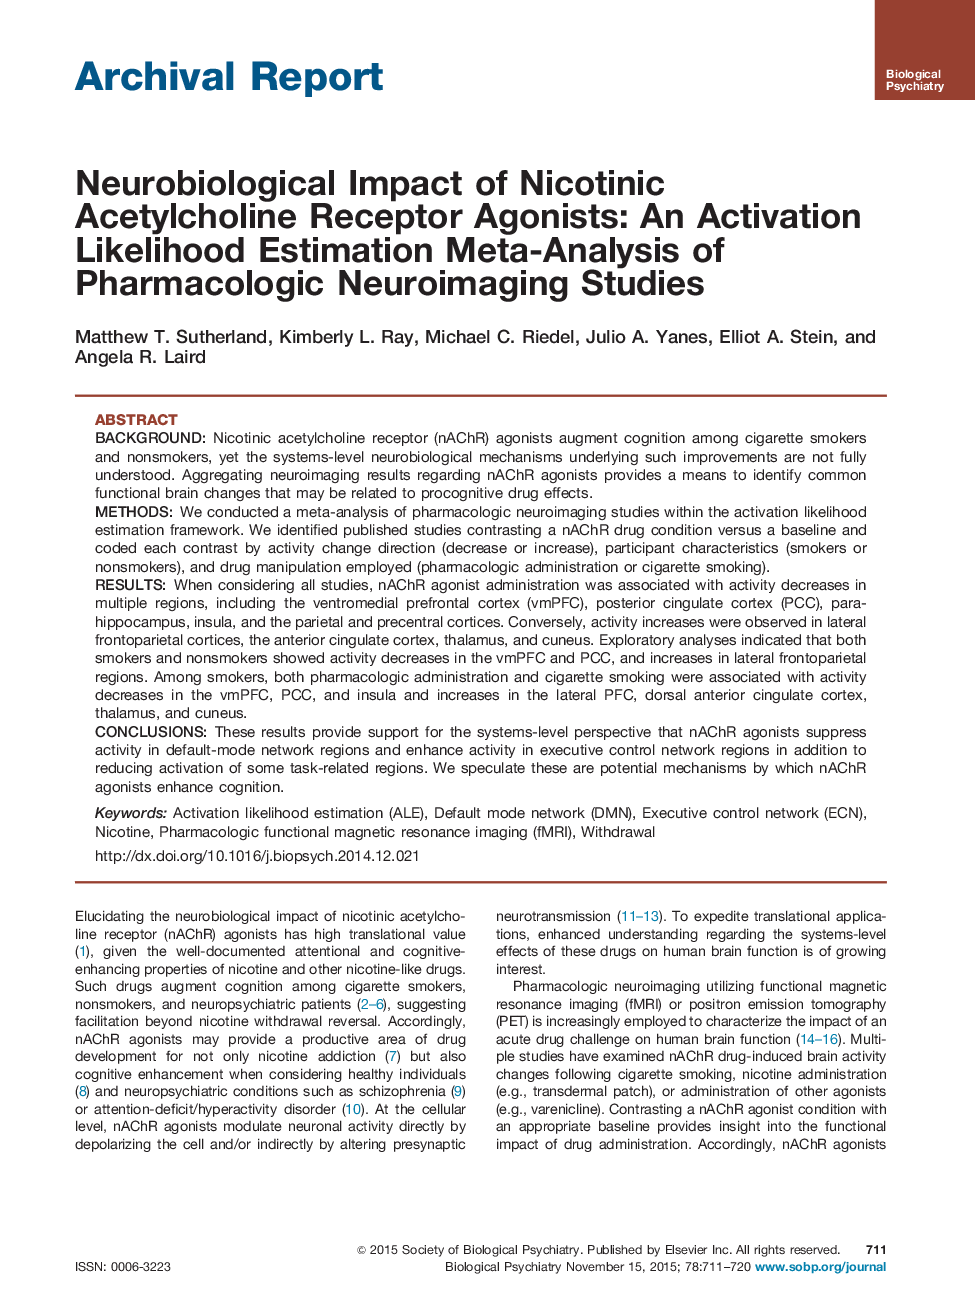 Neurobiological Impact of Nicotinic Acetylcholine Receptor Agonists: An Activation Likelihood Estimation Meta-Analysis of Pharmacologic Neuroimaging Studies